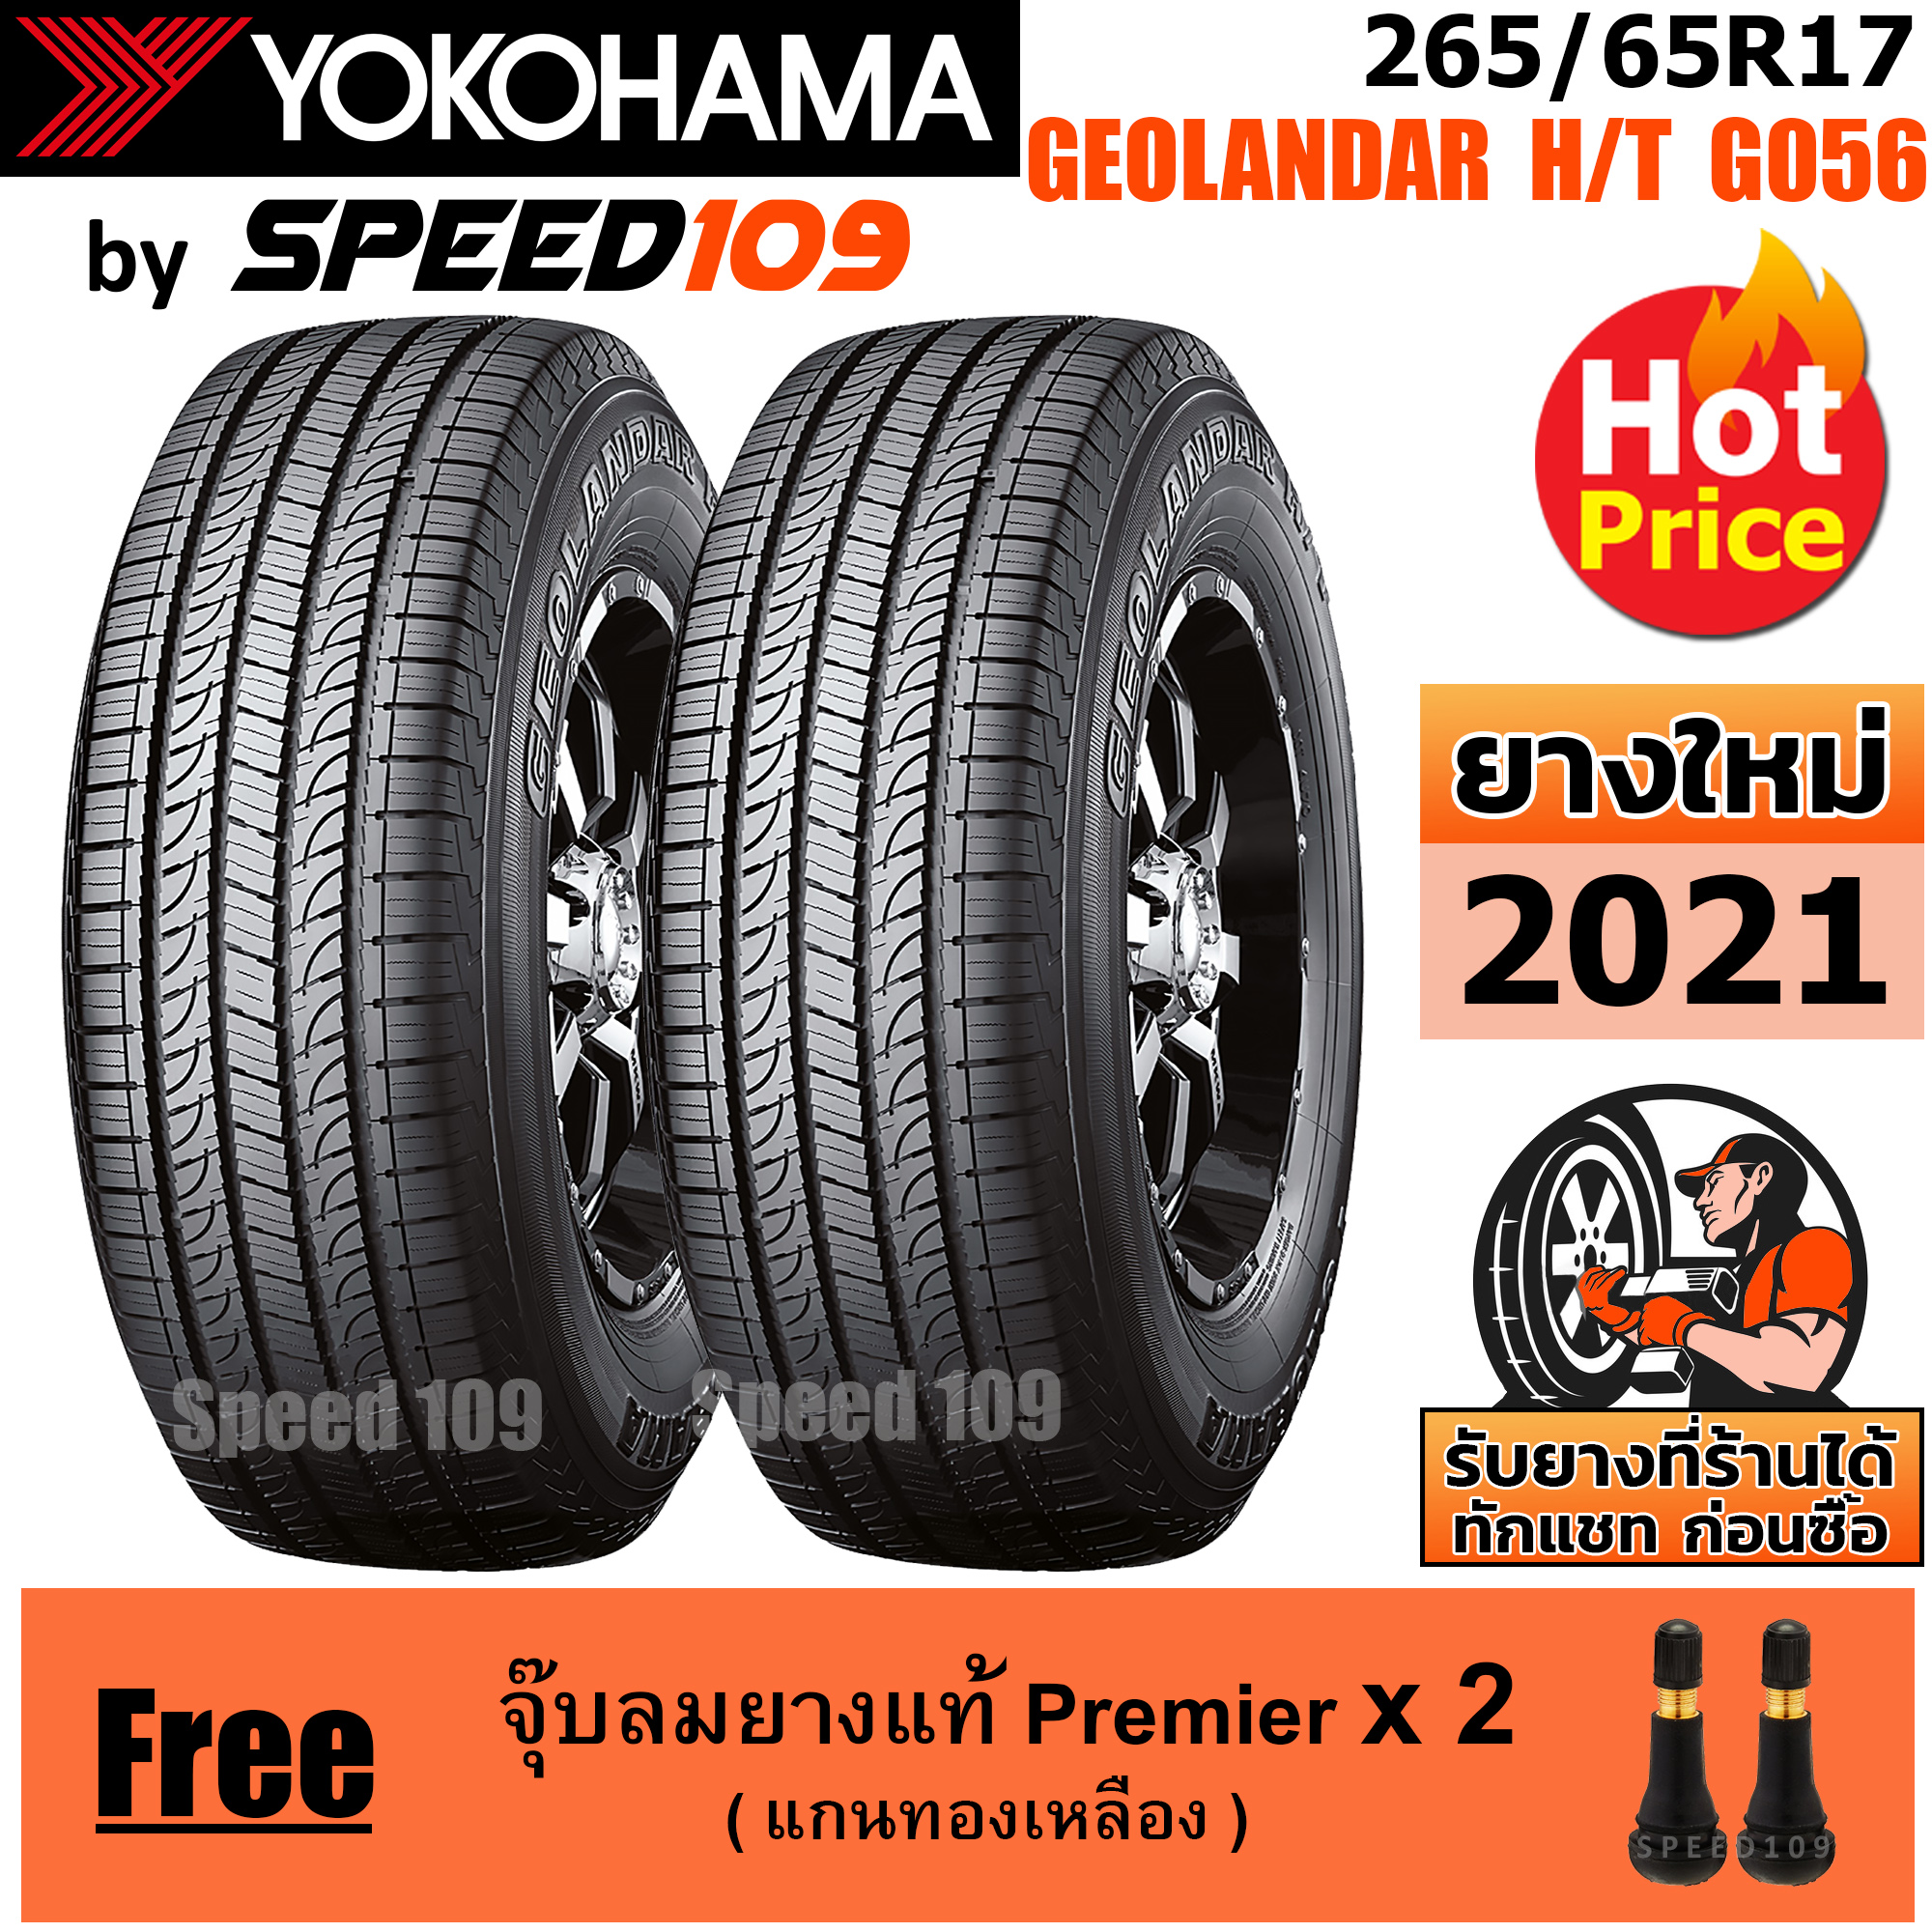 YOKOHAMA ยางรถยนต์ ขอบ 17 ขนาด 265/65R17 รุ่น GEOLANDAR H/T G056 - 2 เส้น (ปี 2021)